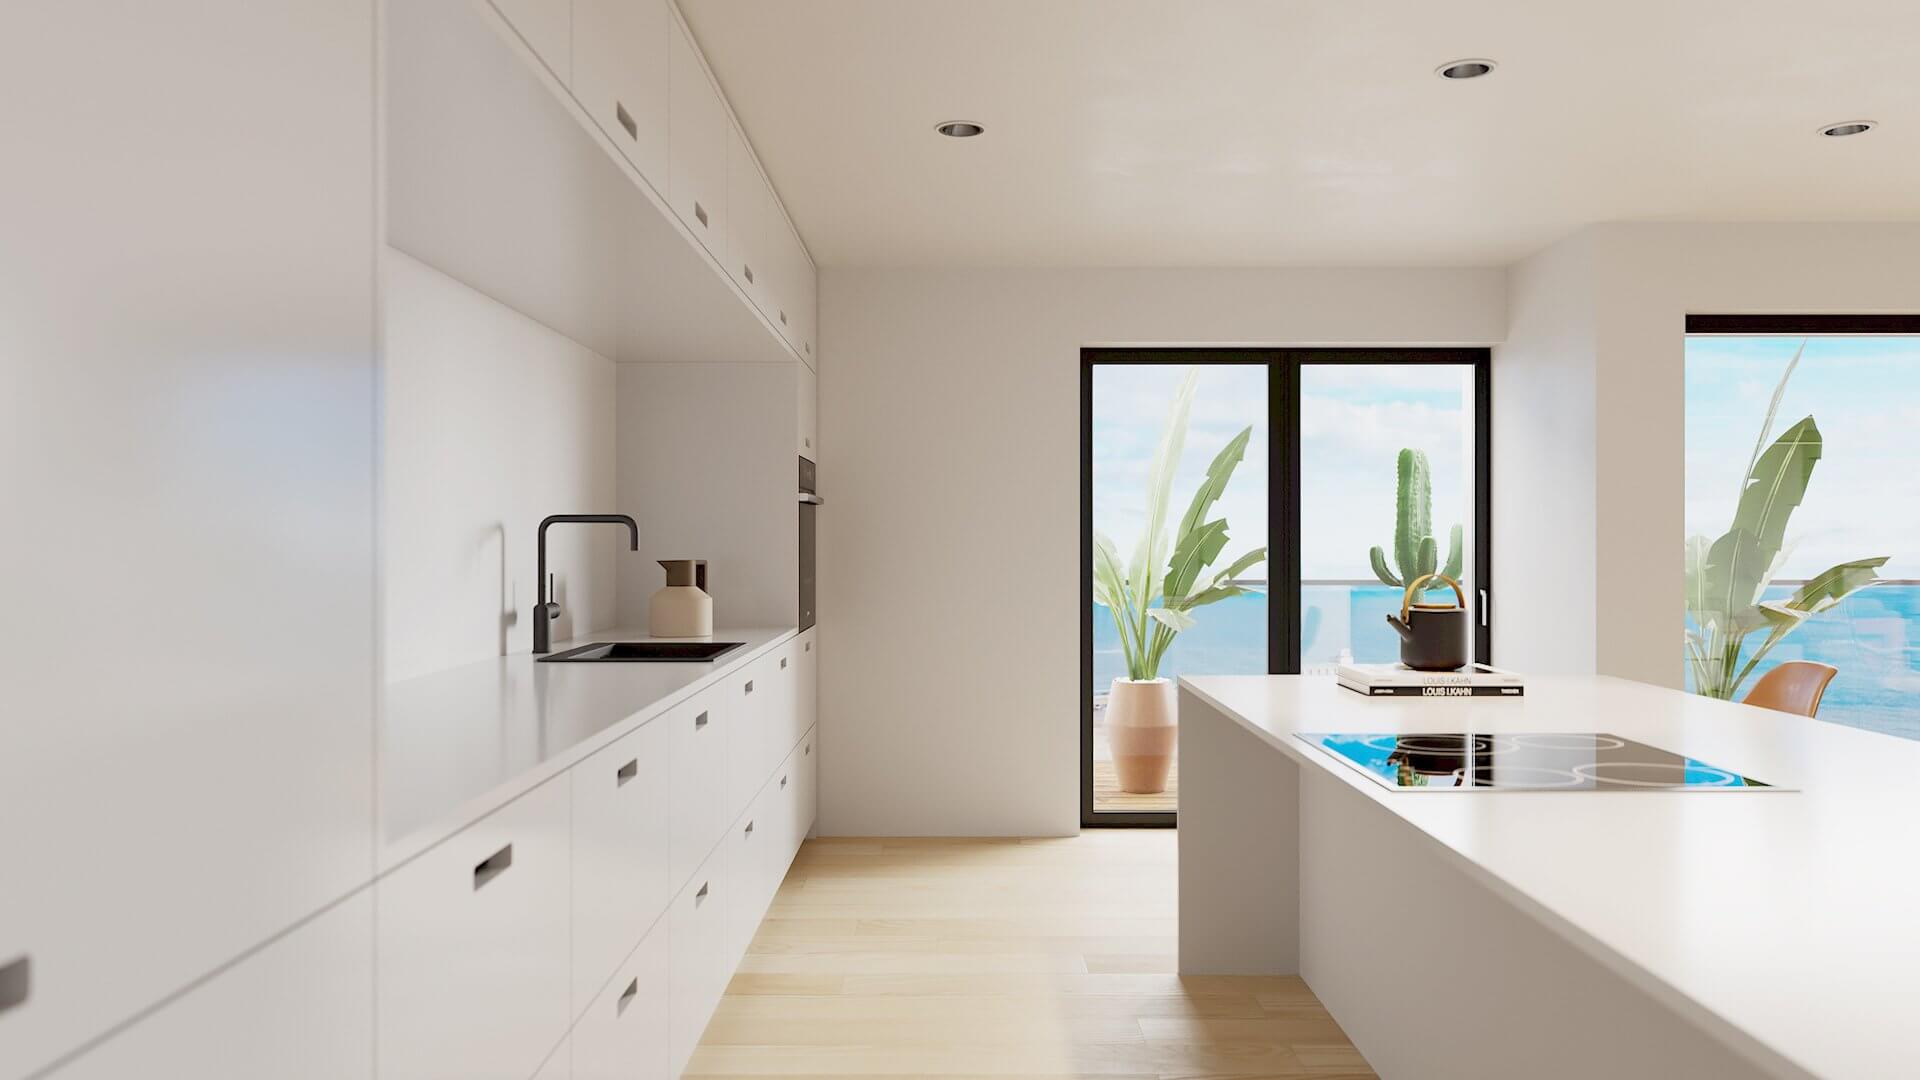 Apartment kitchen white ocean view - cgi visualization